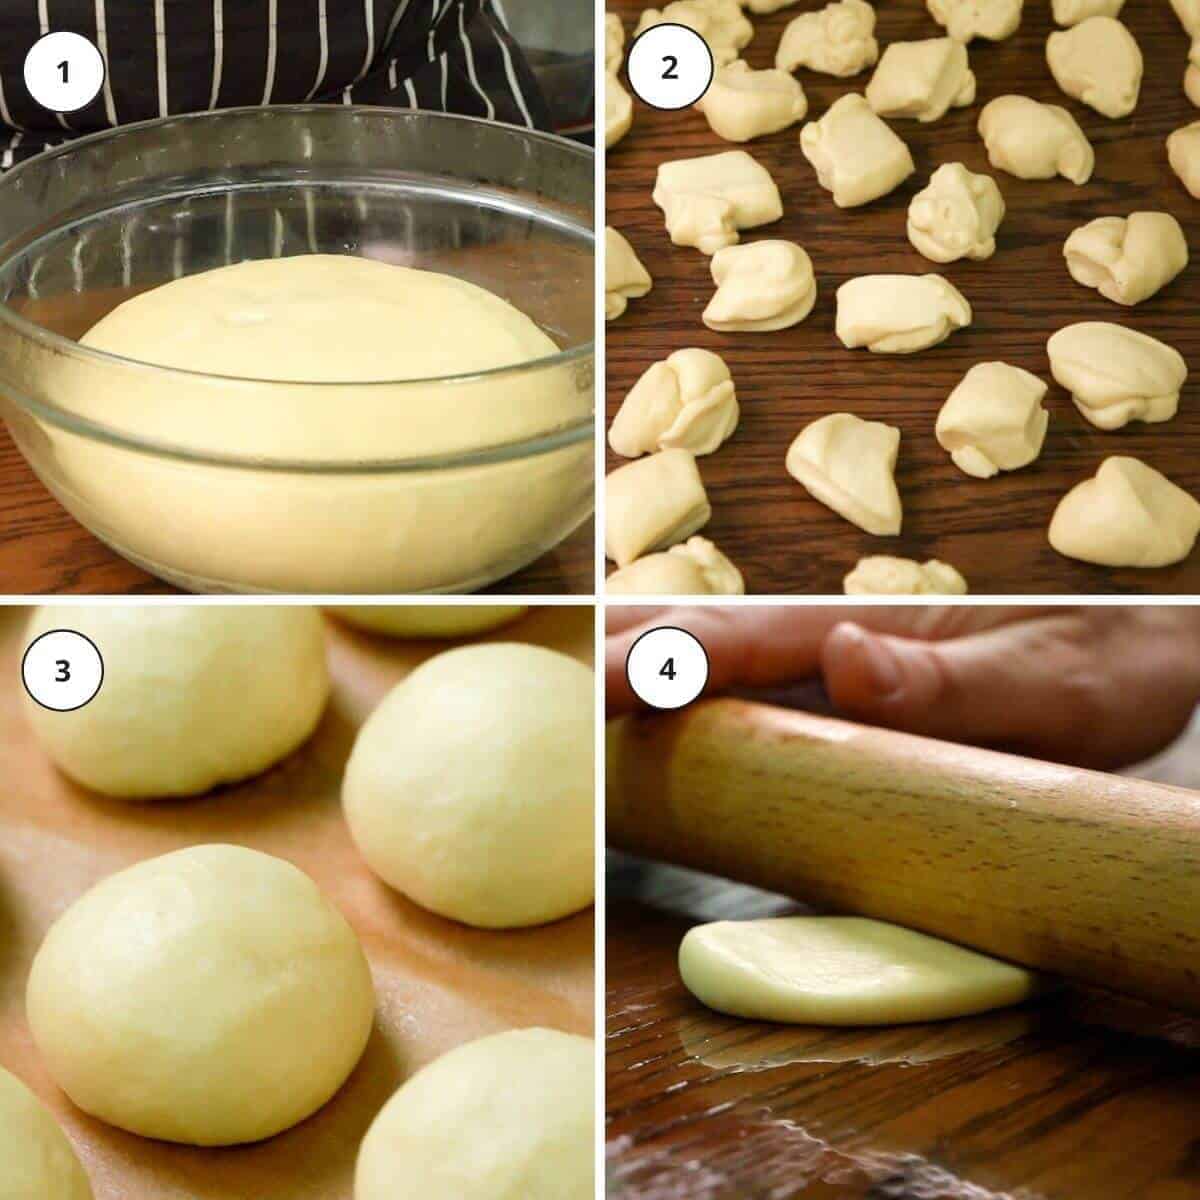 Picture steps to make russian piroshki dough.